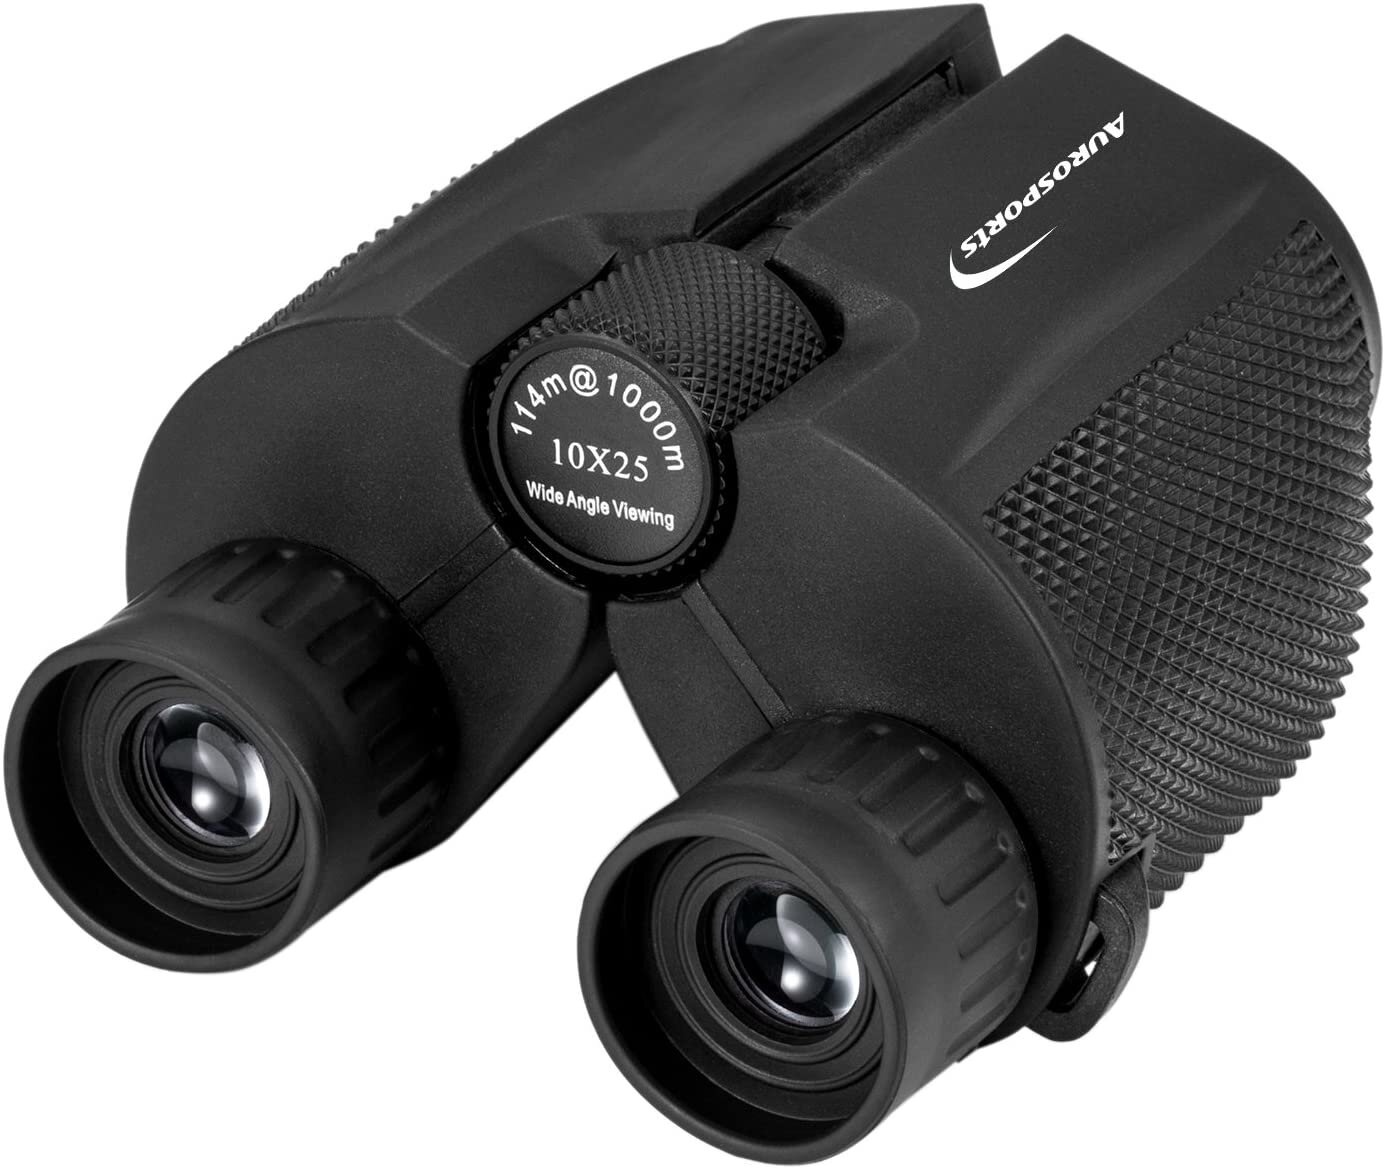 $23 Compact Binoculars